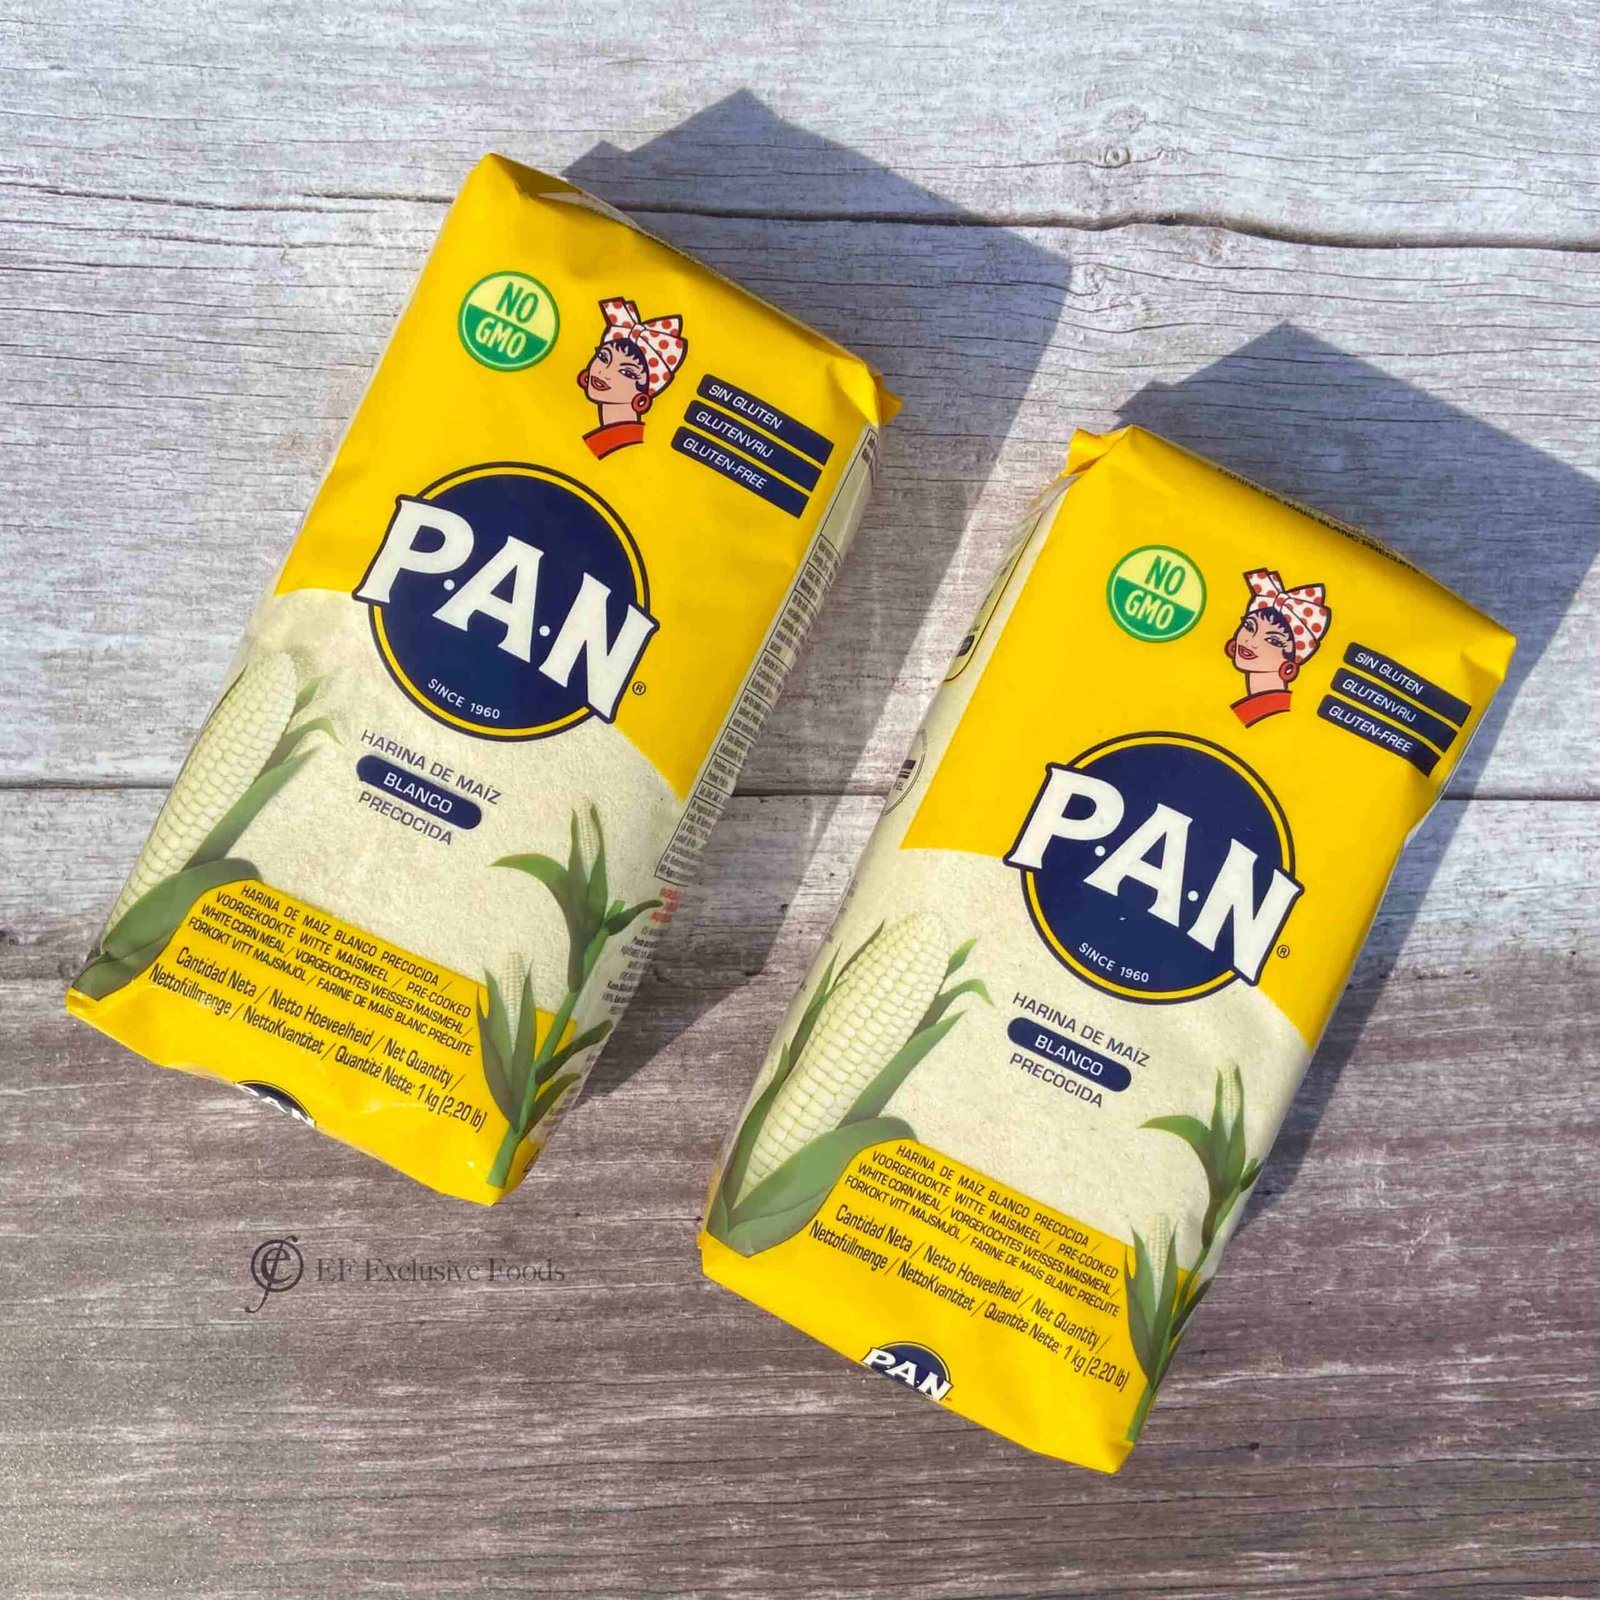 Harina Pan 1 kg - Exclusive Foods UK